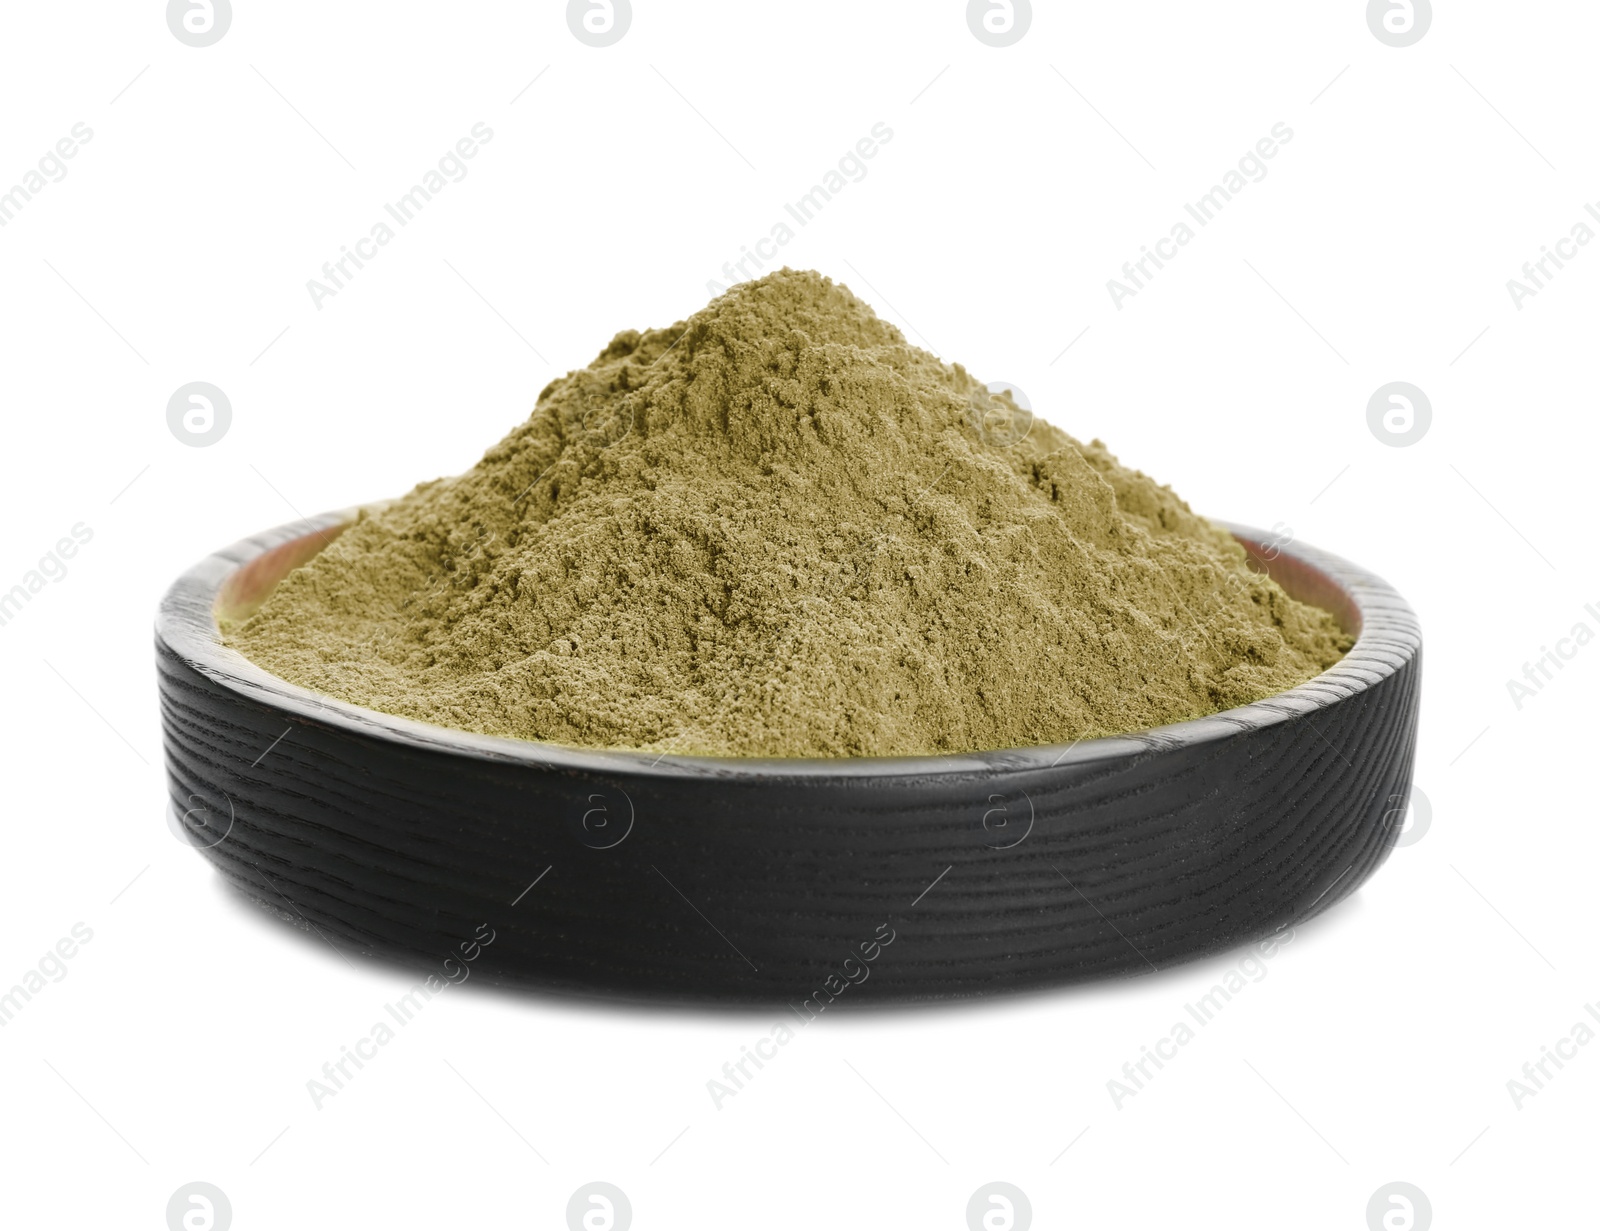 Photo of Bowl with hemp protein powder on white background